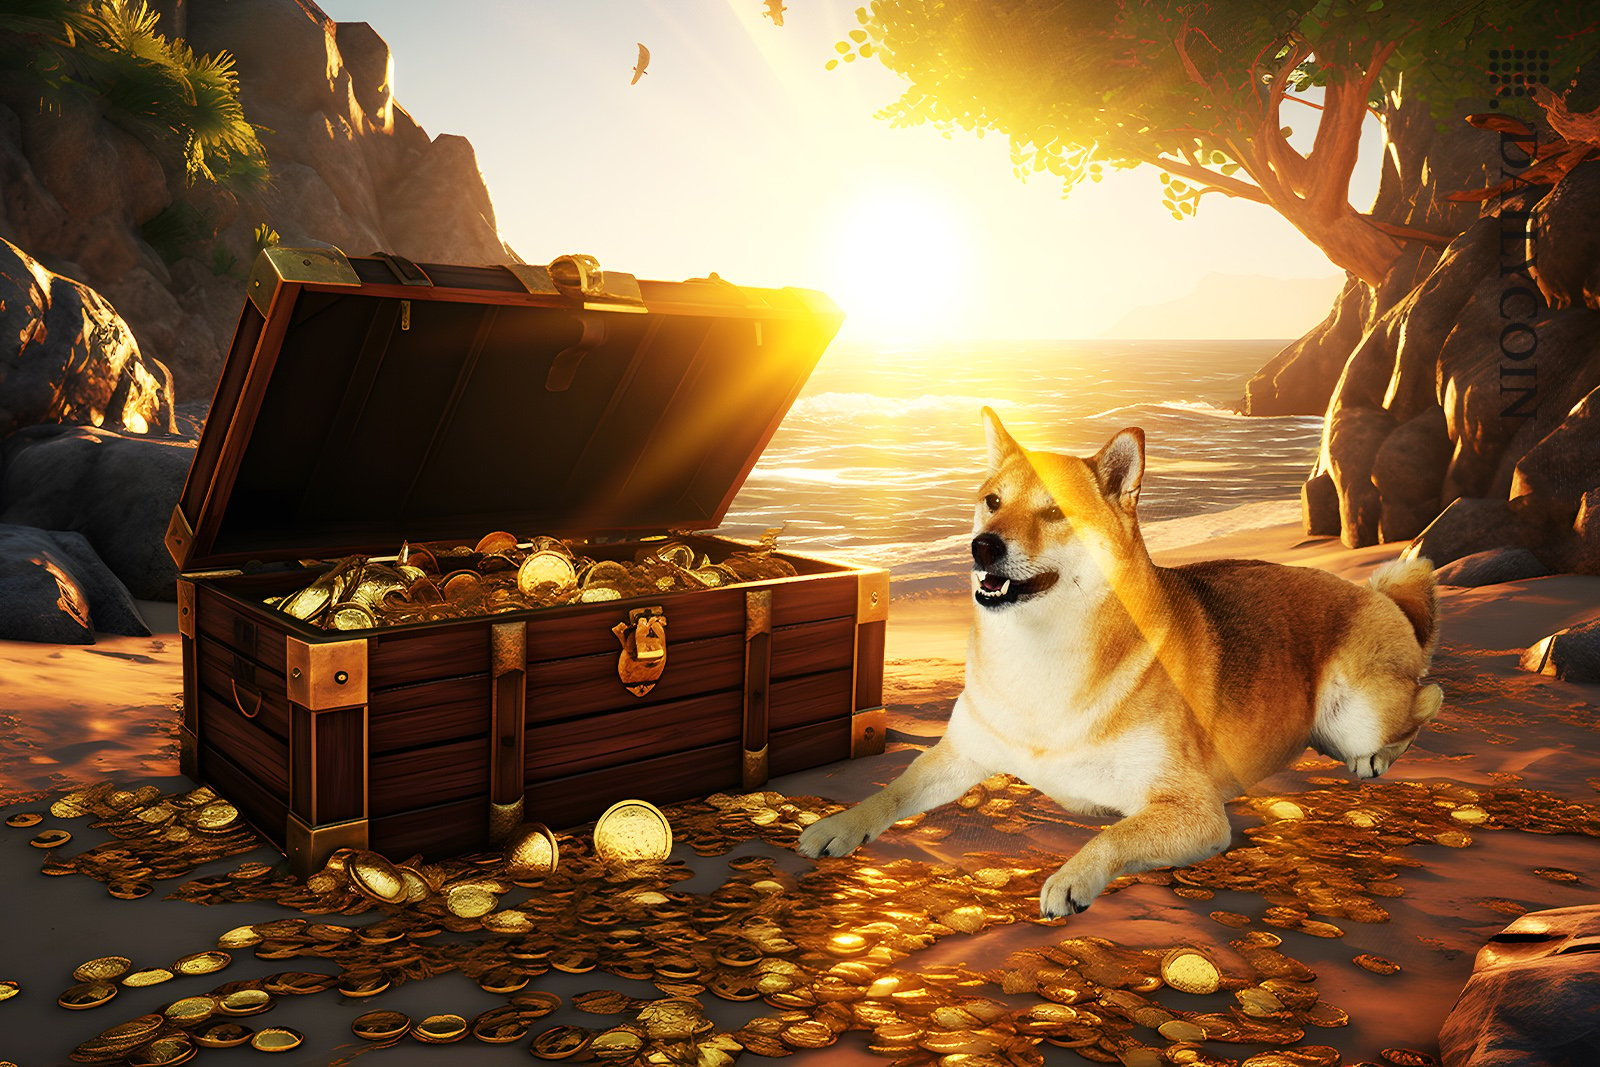 Shiba inu on the beach enjoying the sunset with his treasure.